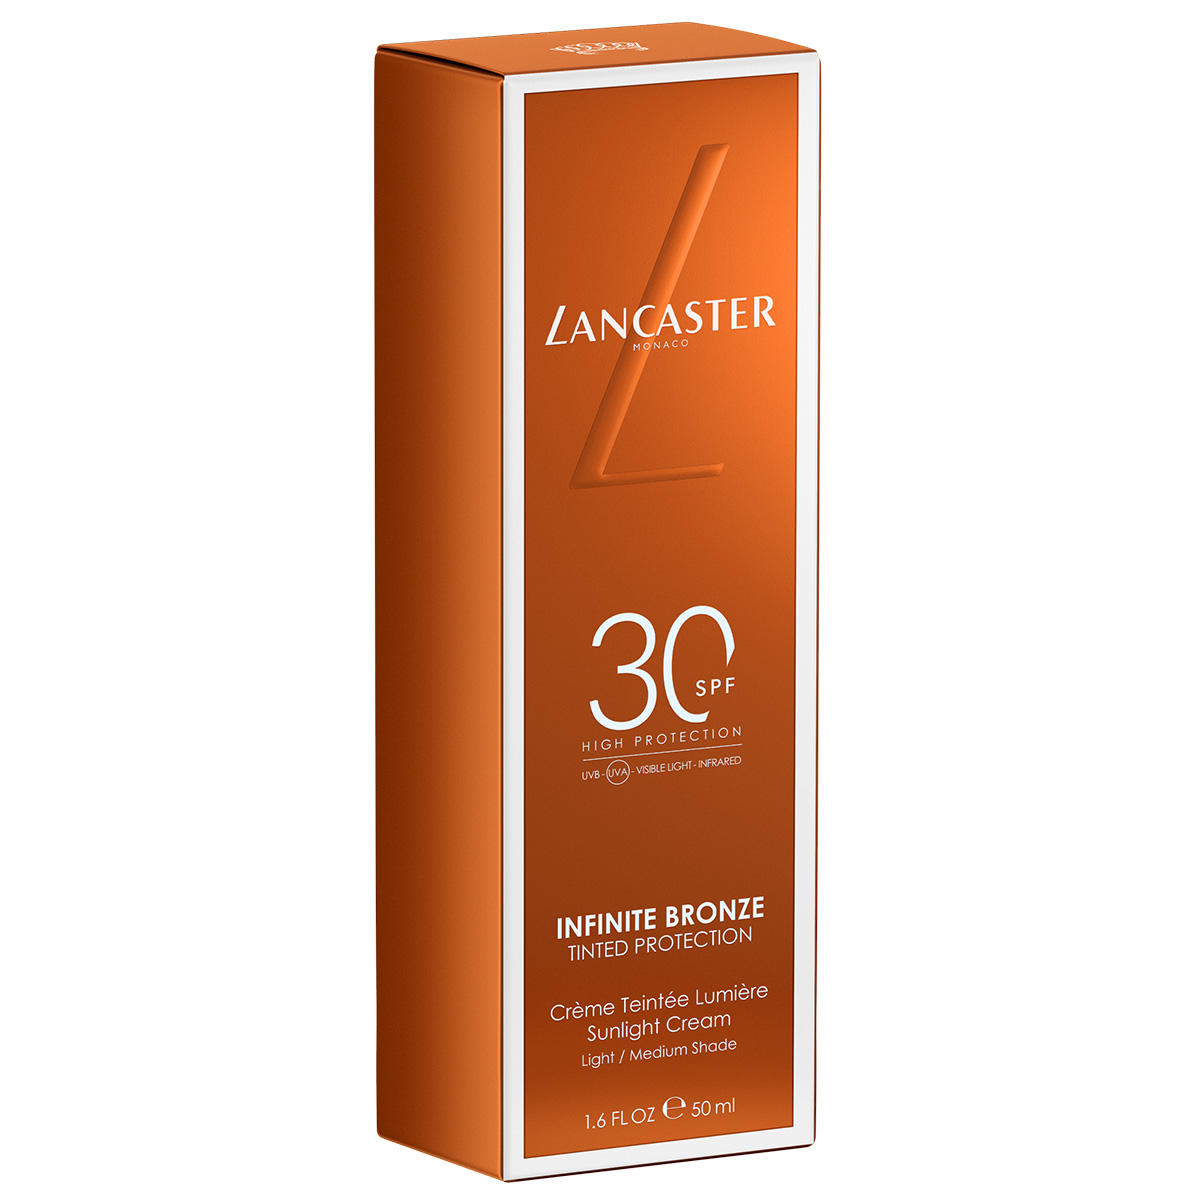 Lancaster Infinite Bronze Crème Teintée Lumière SPF 30 Light / Medium, 50 ml - 2